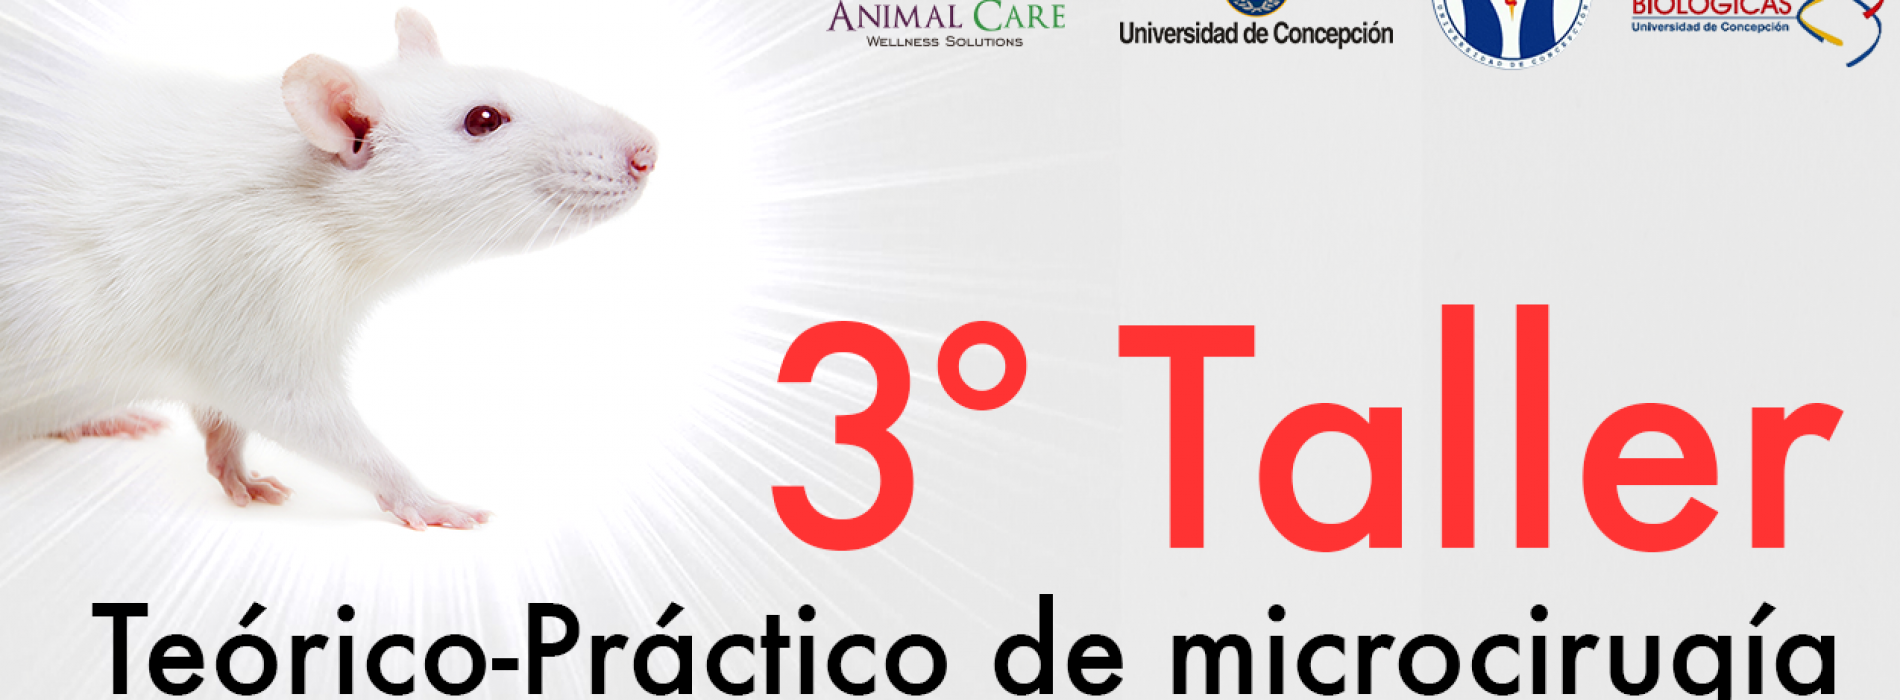 "Workshop on MICROSURGERY in research animals" - Universidad de Concepción. 1 WEEK LEFT